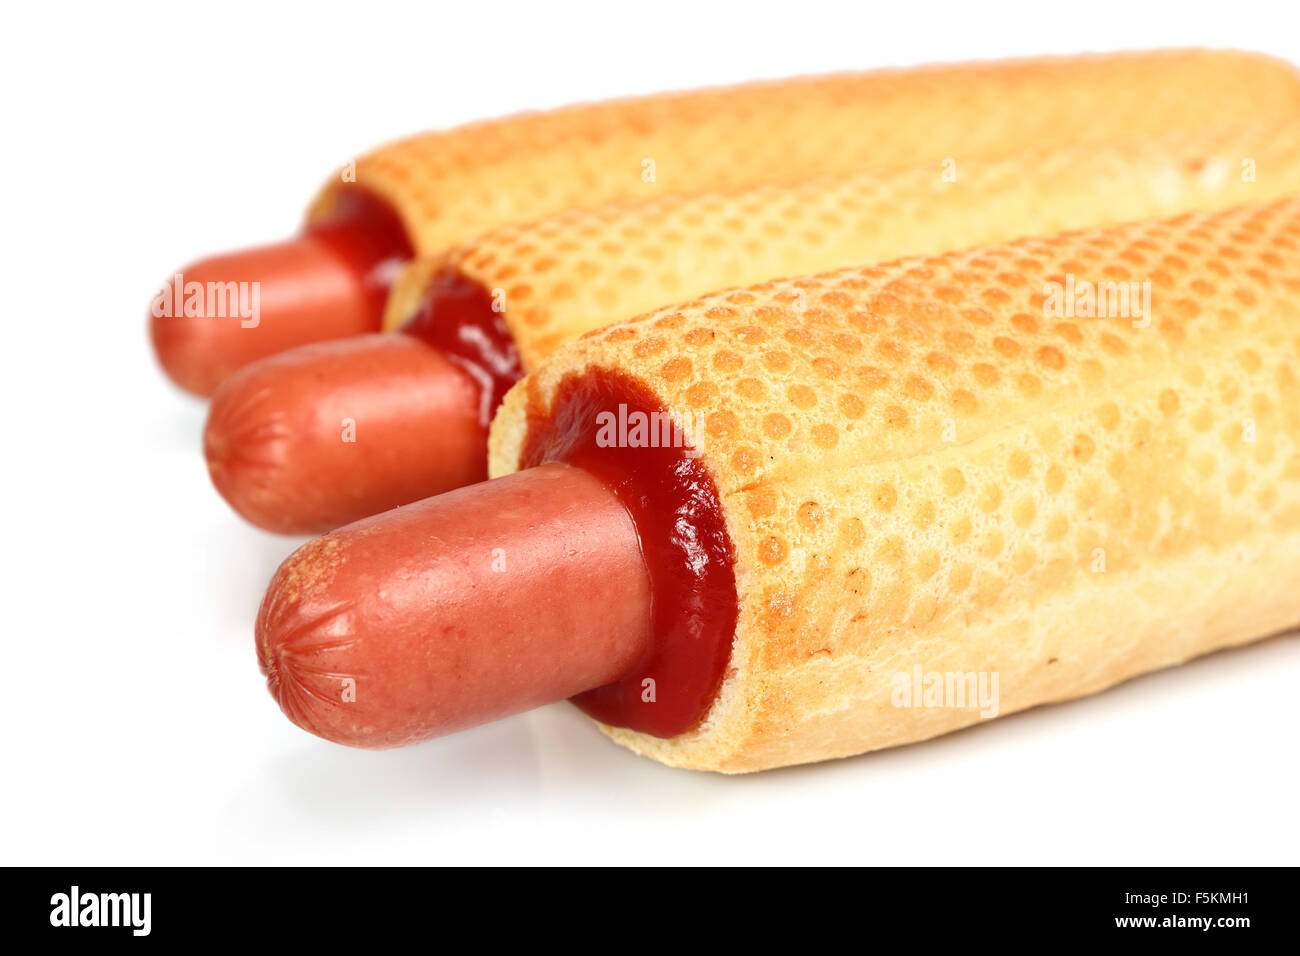 francia hot dog kifli 20